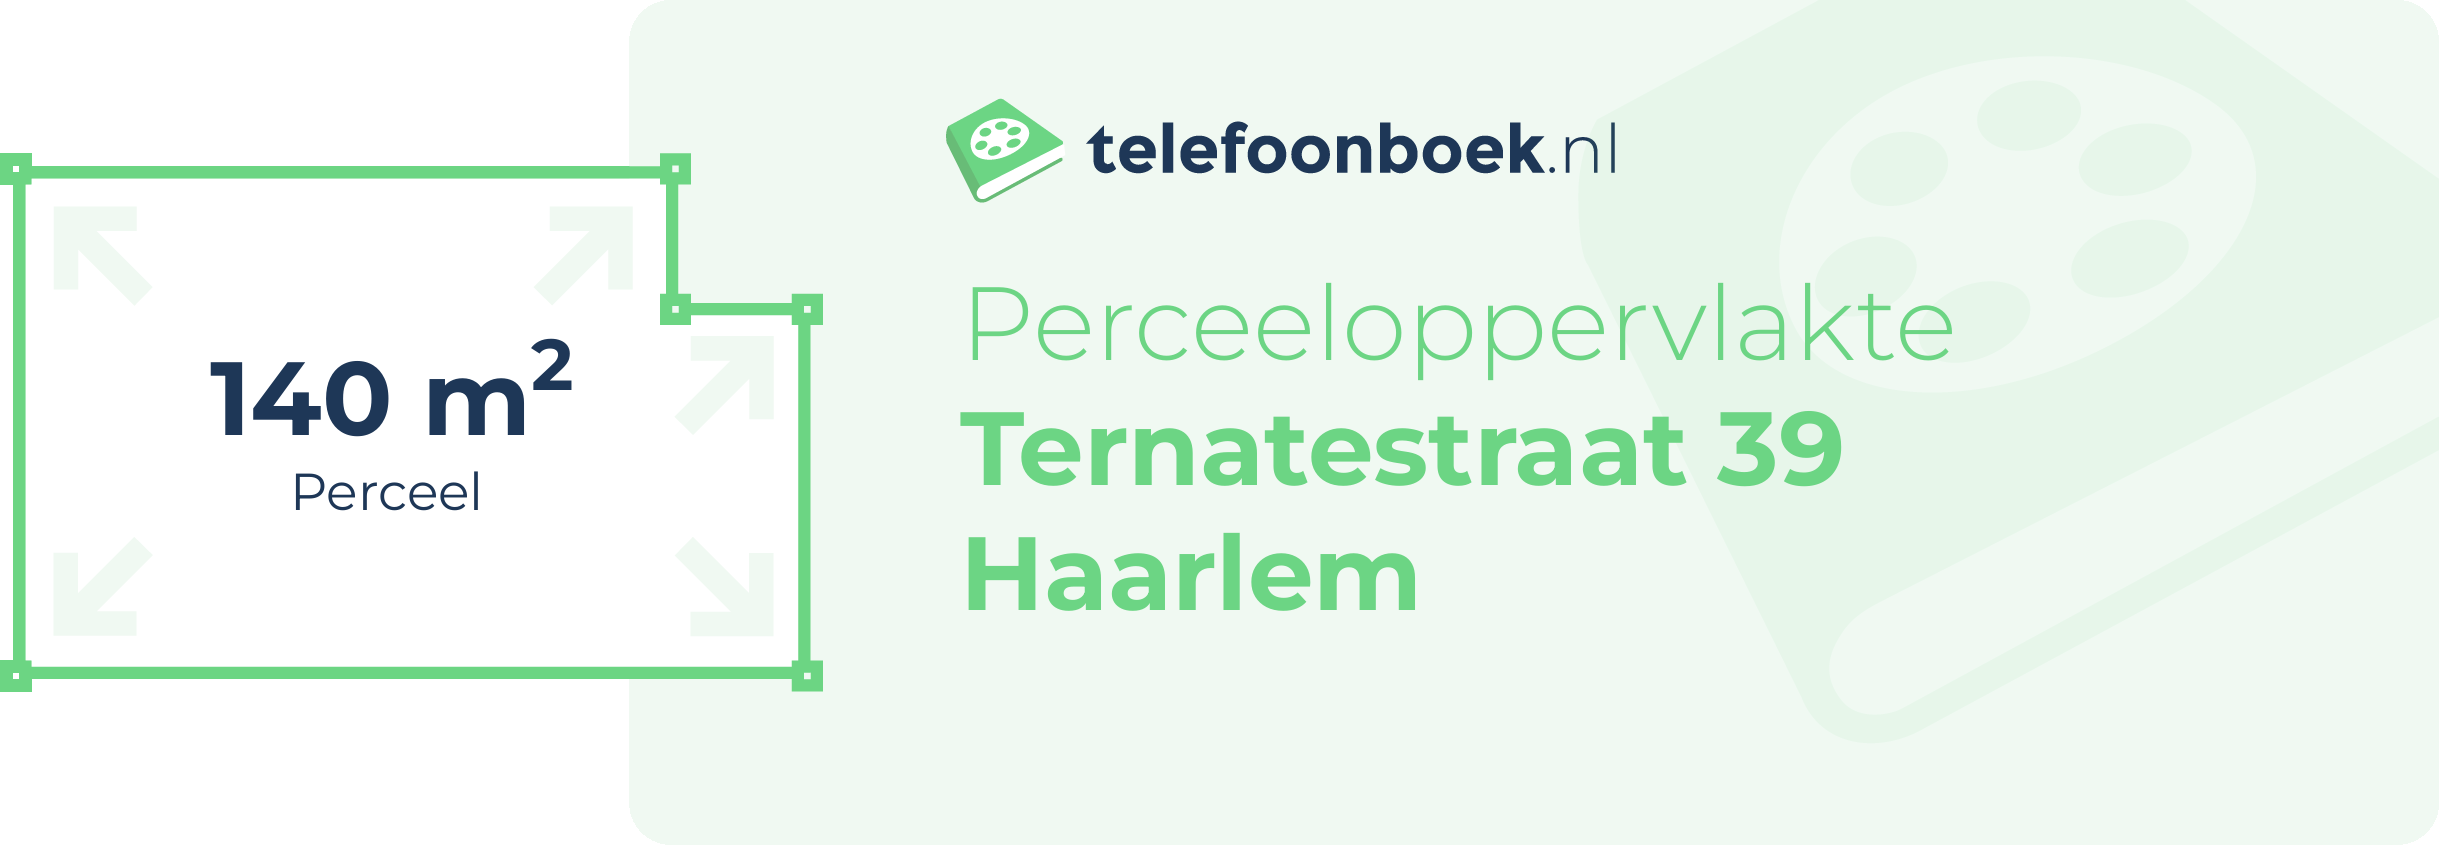 Perceeloppervlakte Ternatestraat 39 Haarlem